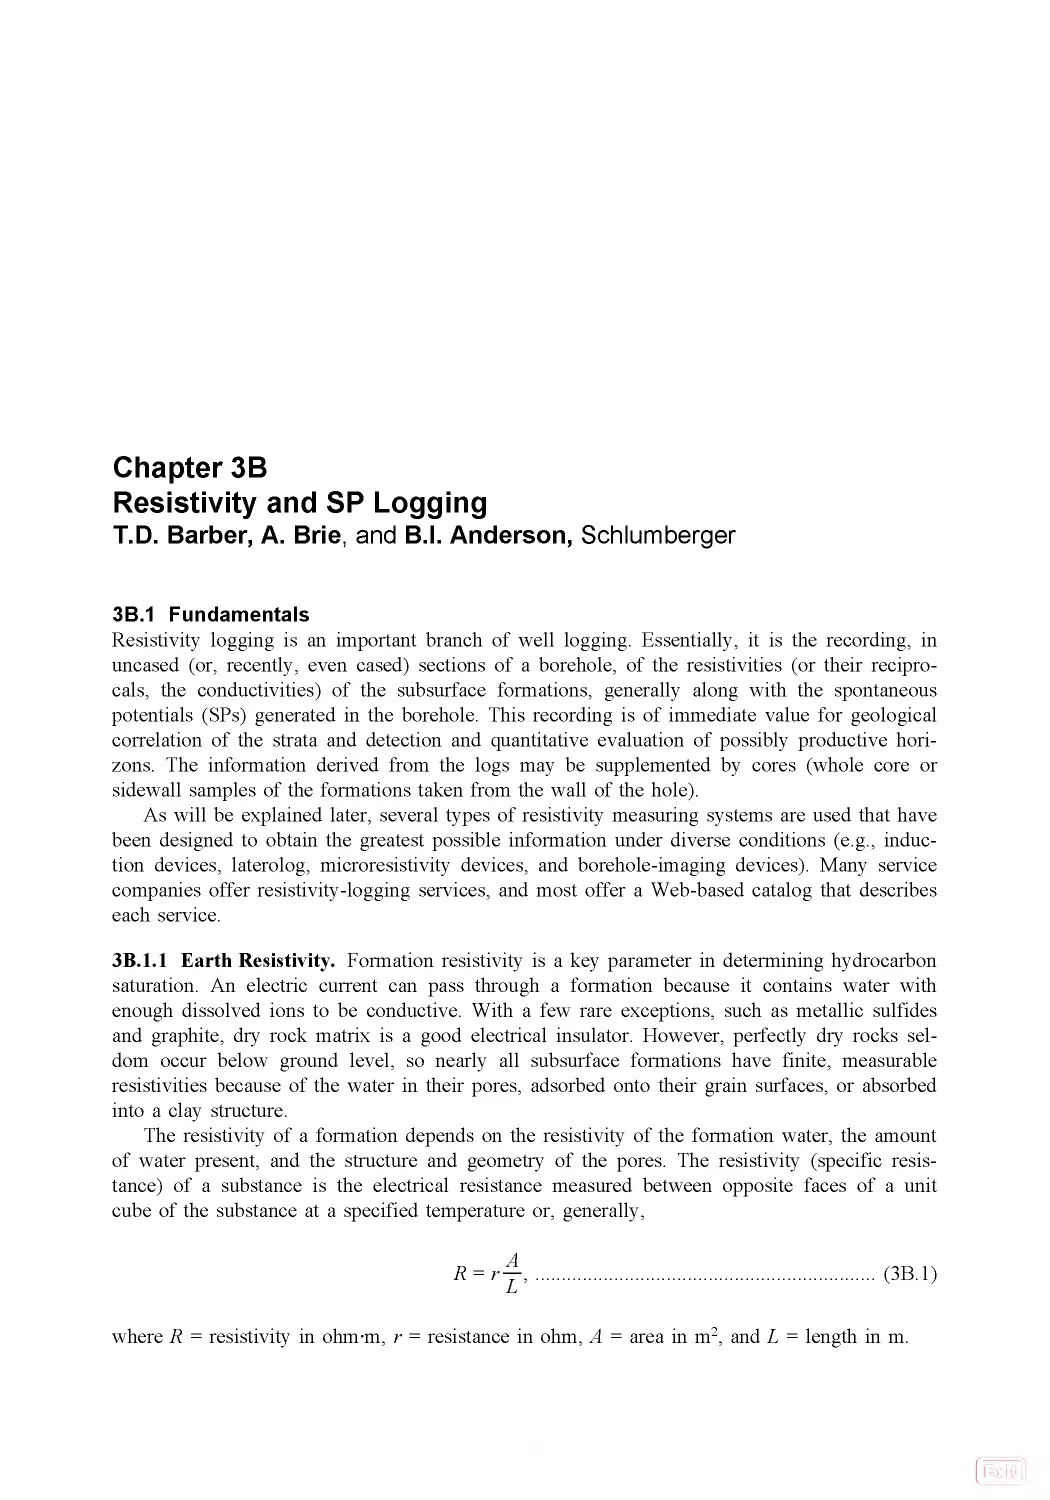 3B - Resistivity and SP Logging